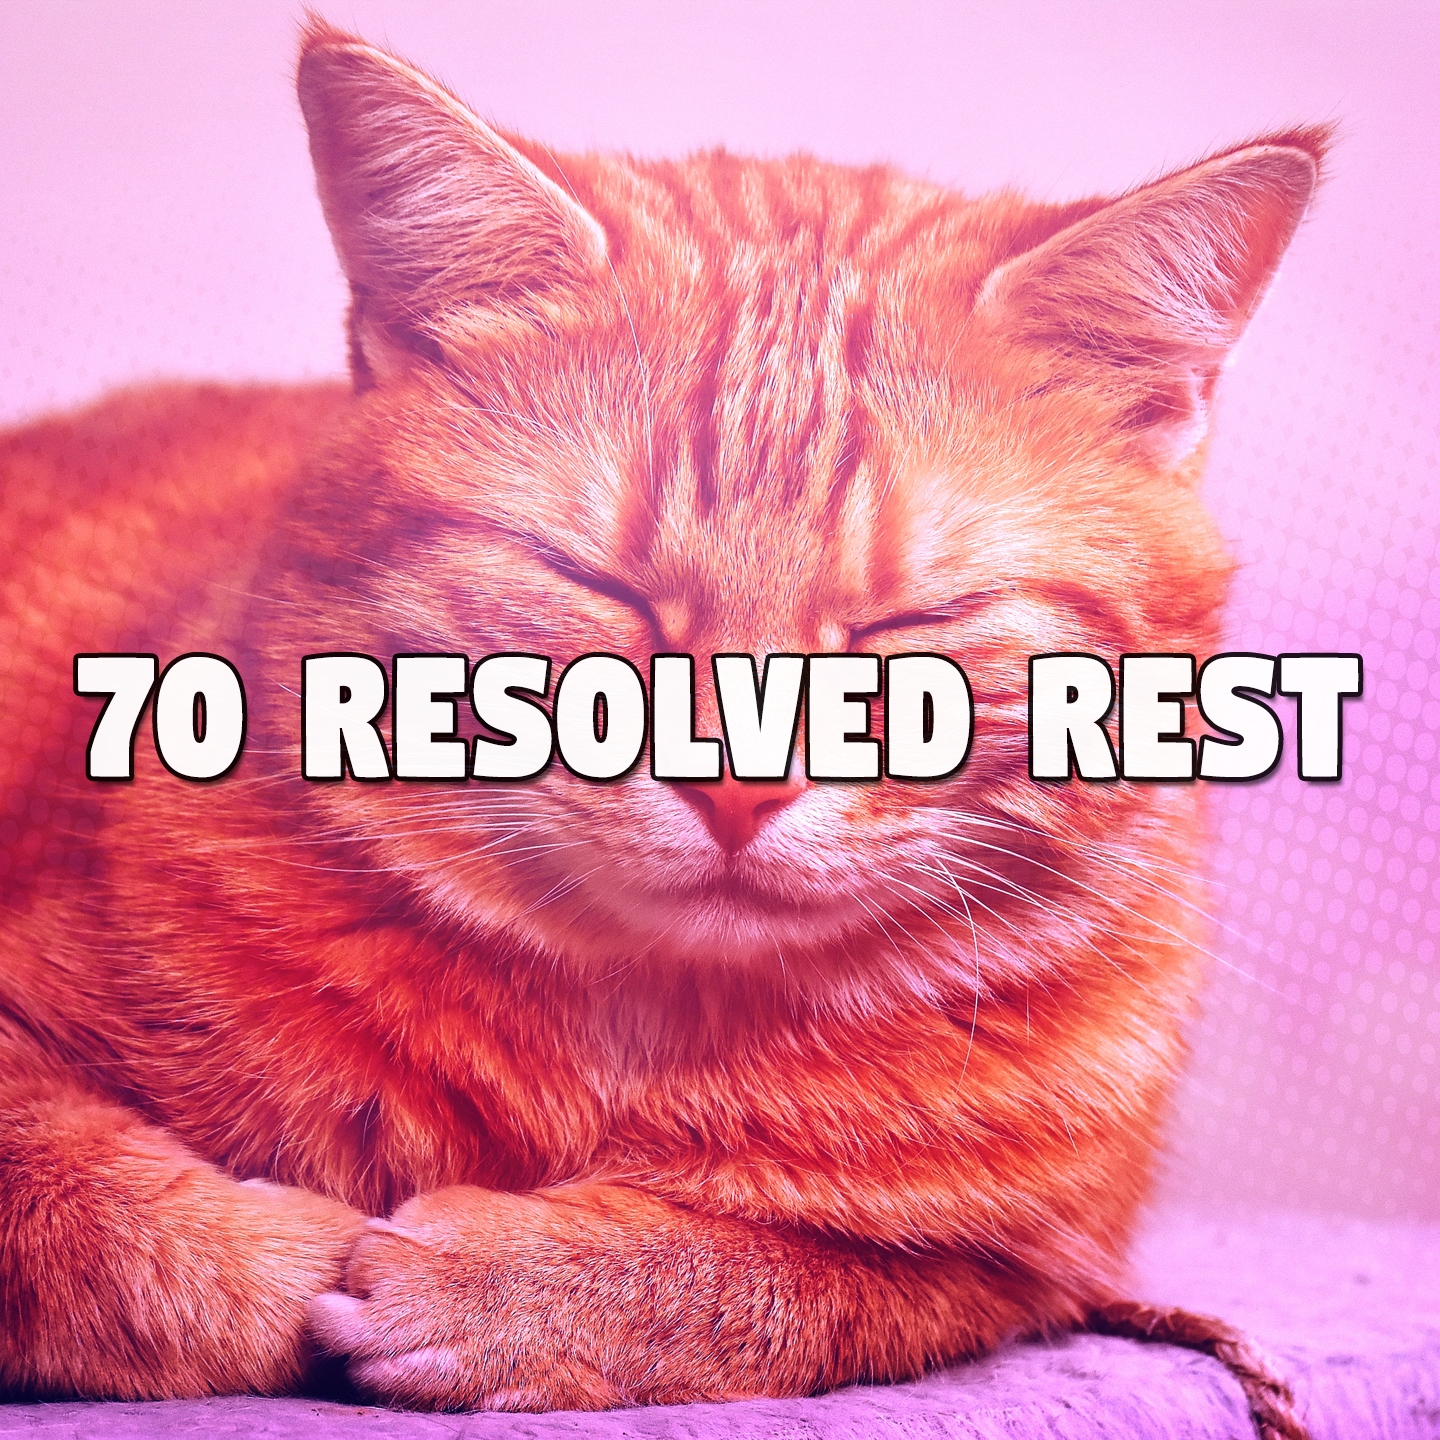 70 Resolved Rest